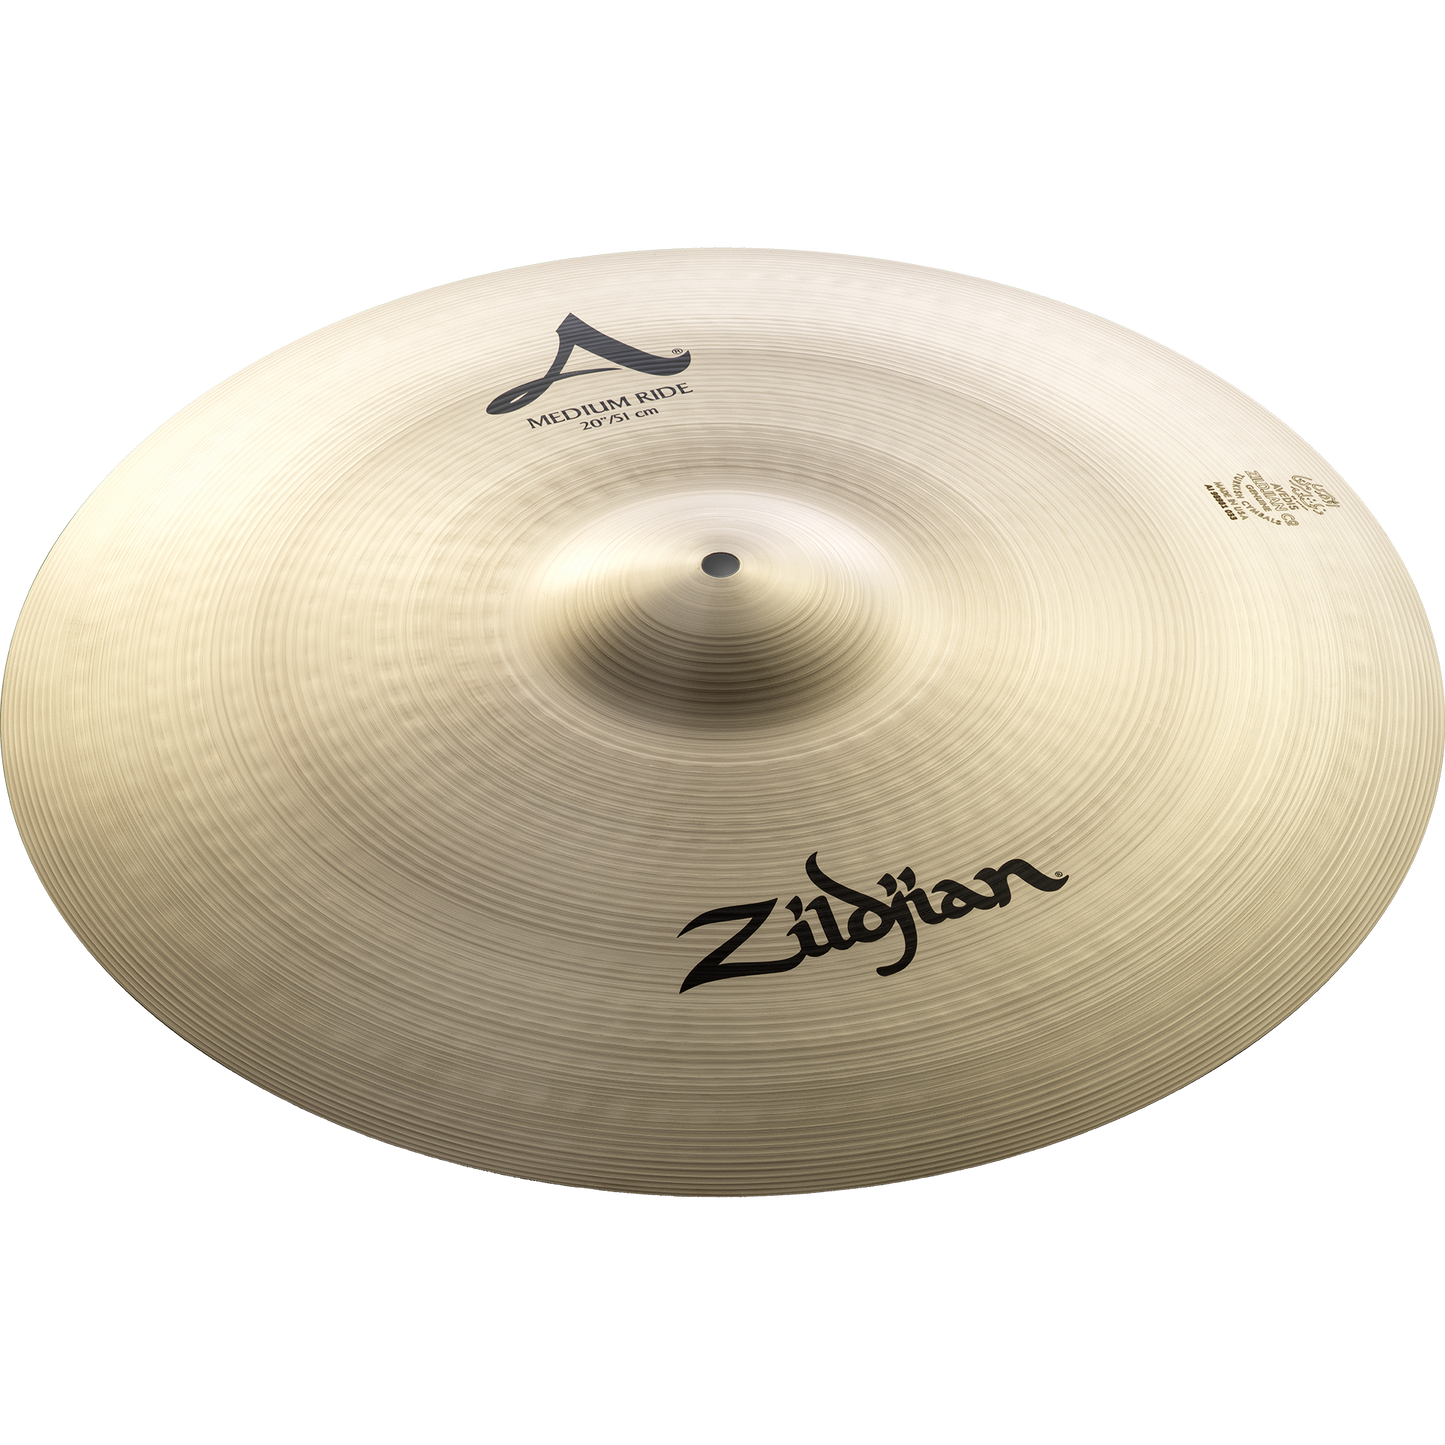 Zildjian 20” A Series Medium Ride Cymbal